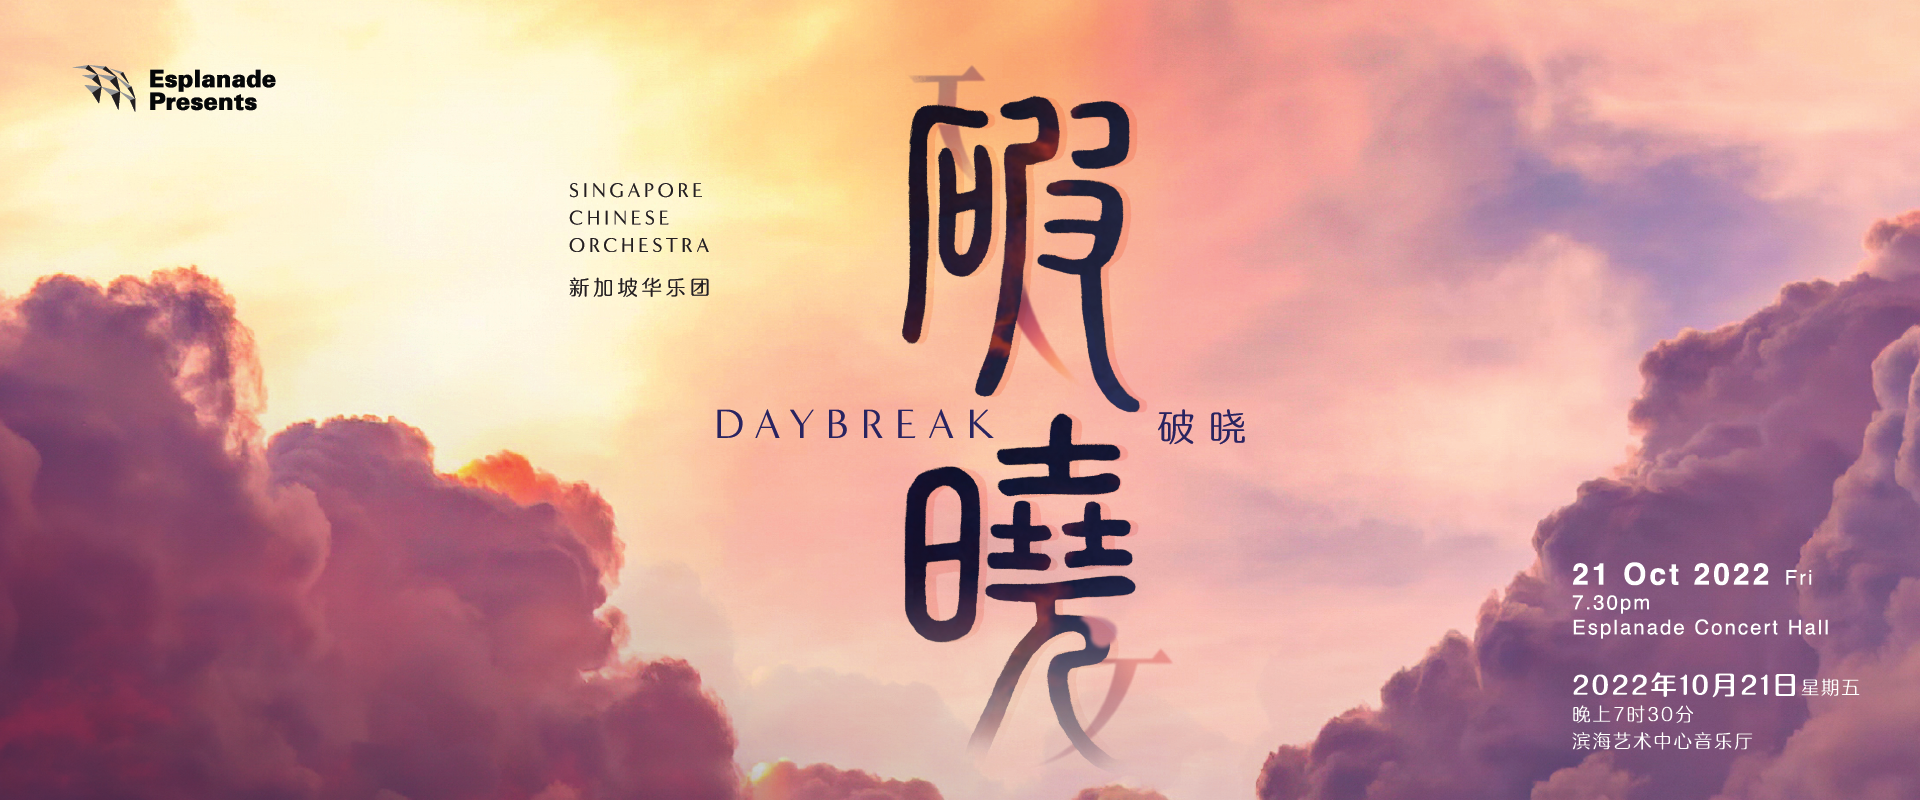 KV-Daybreak_F_1920x800-01 Daybreak